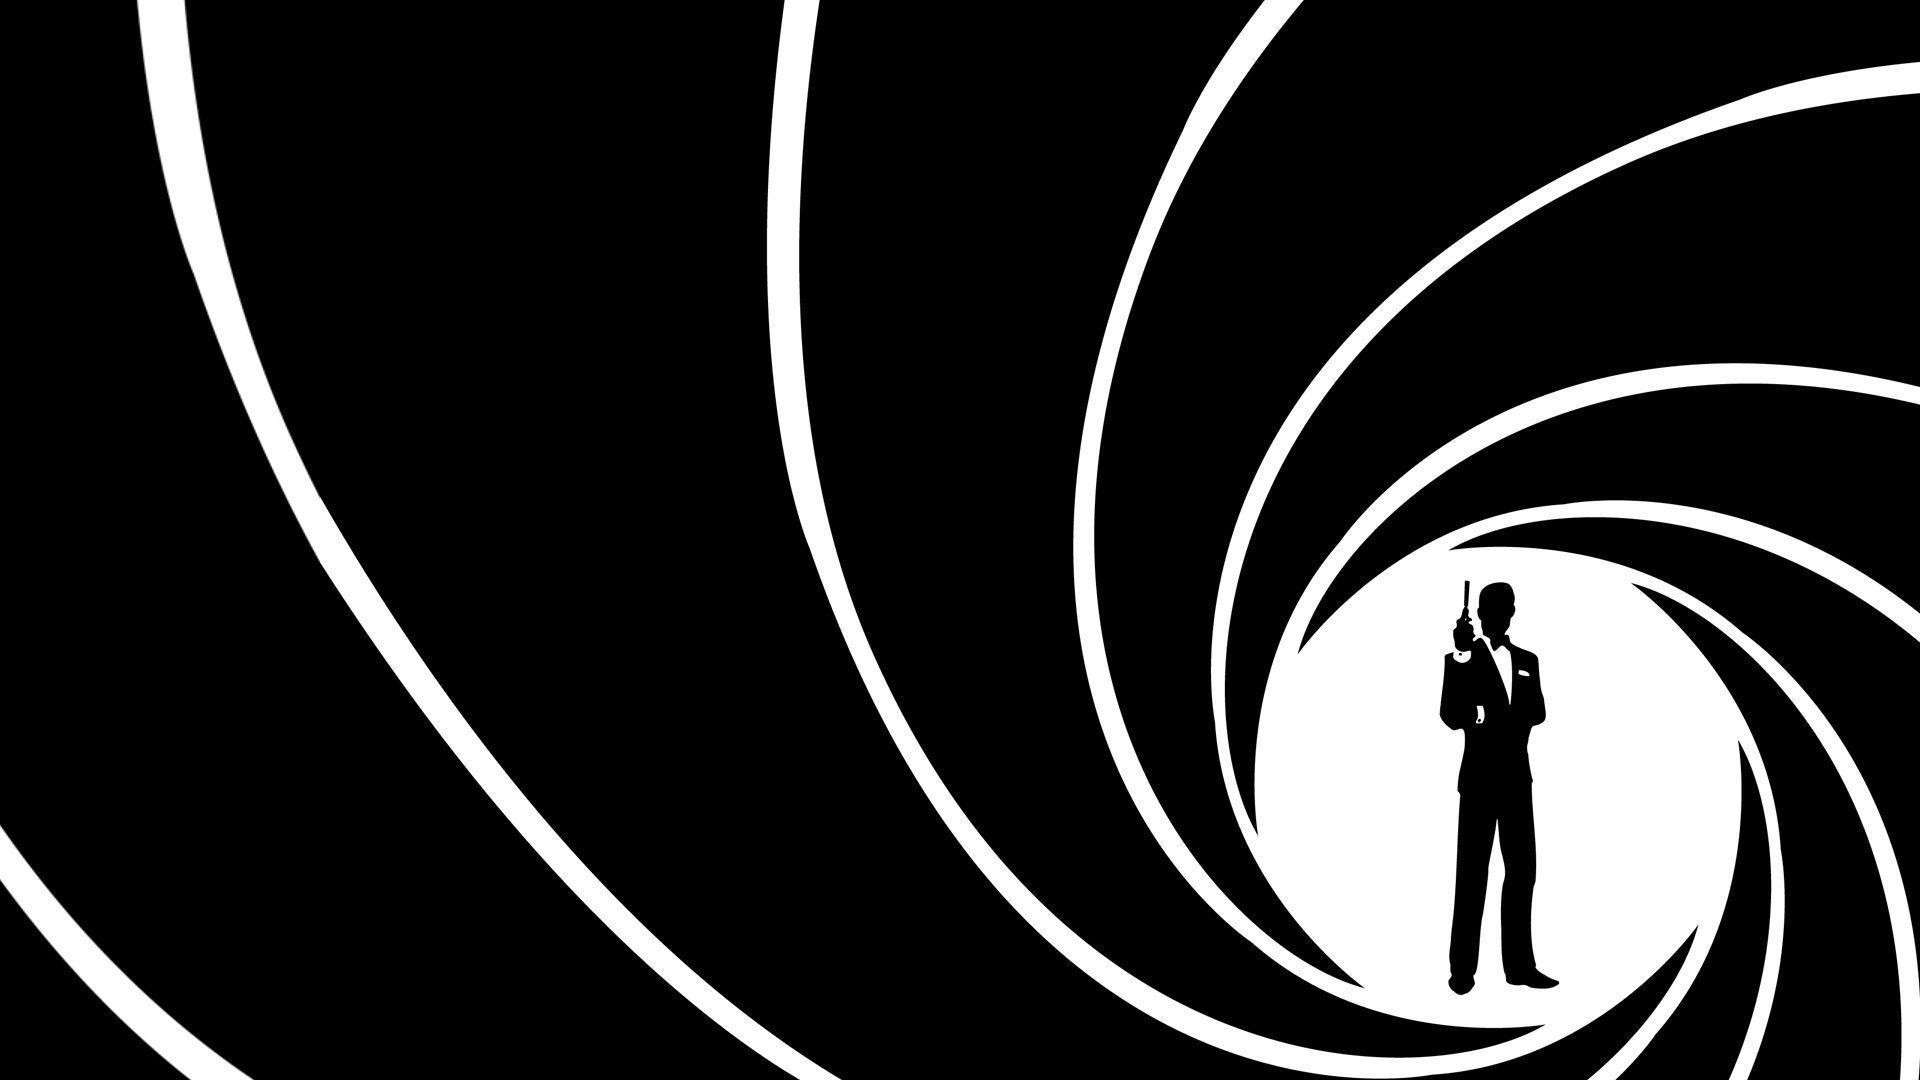 James Bond Wallpaper